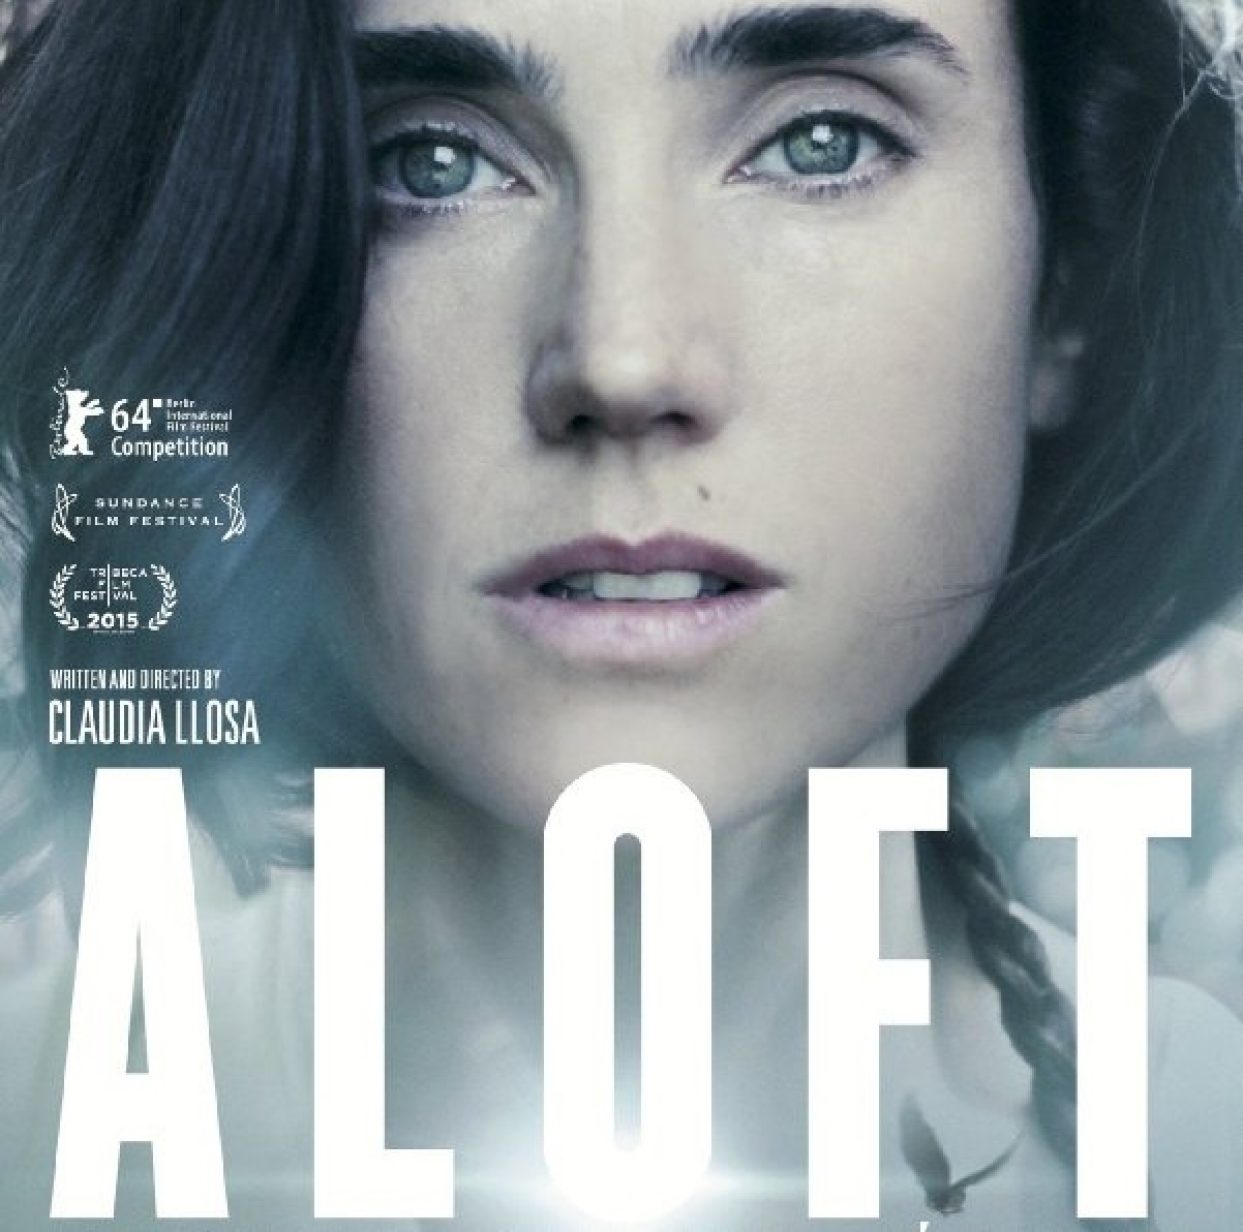 Aloft (2015)